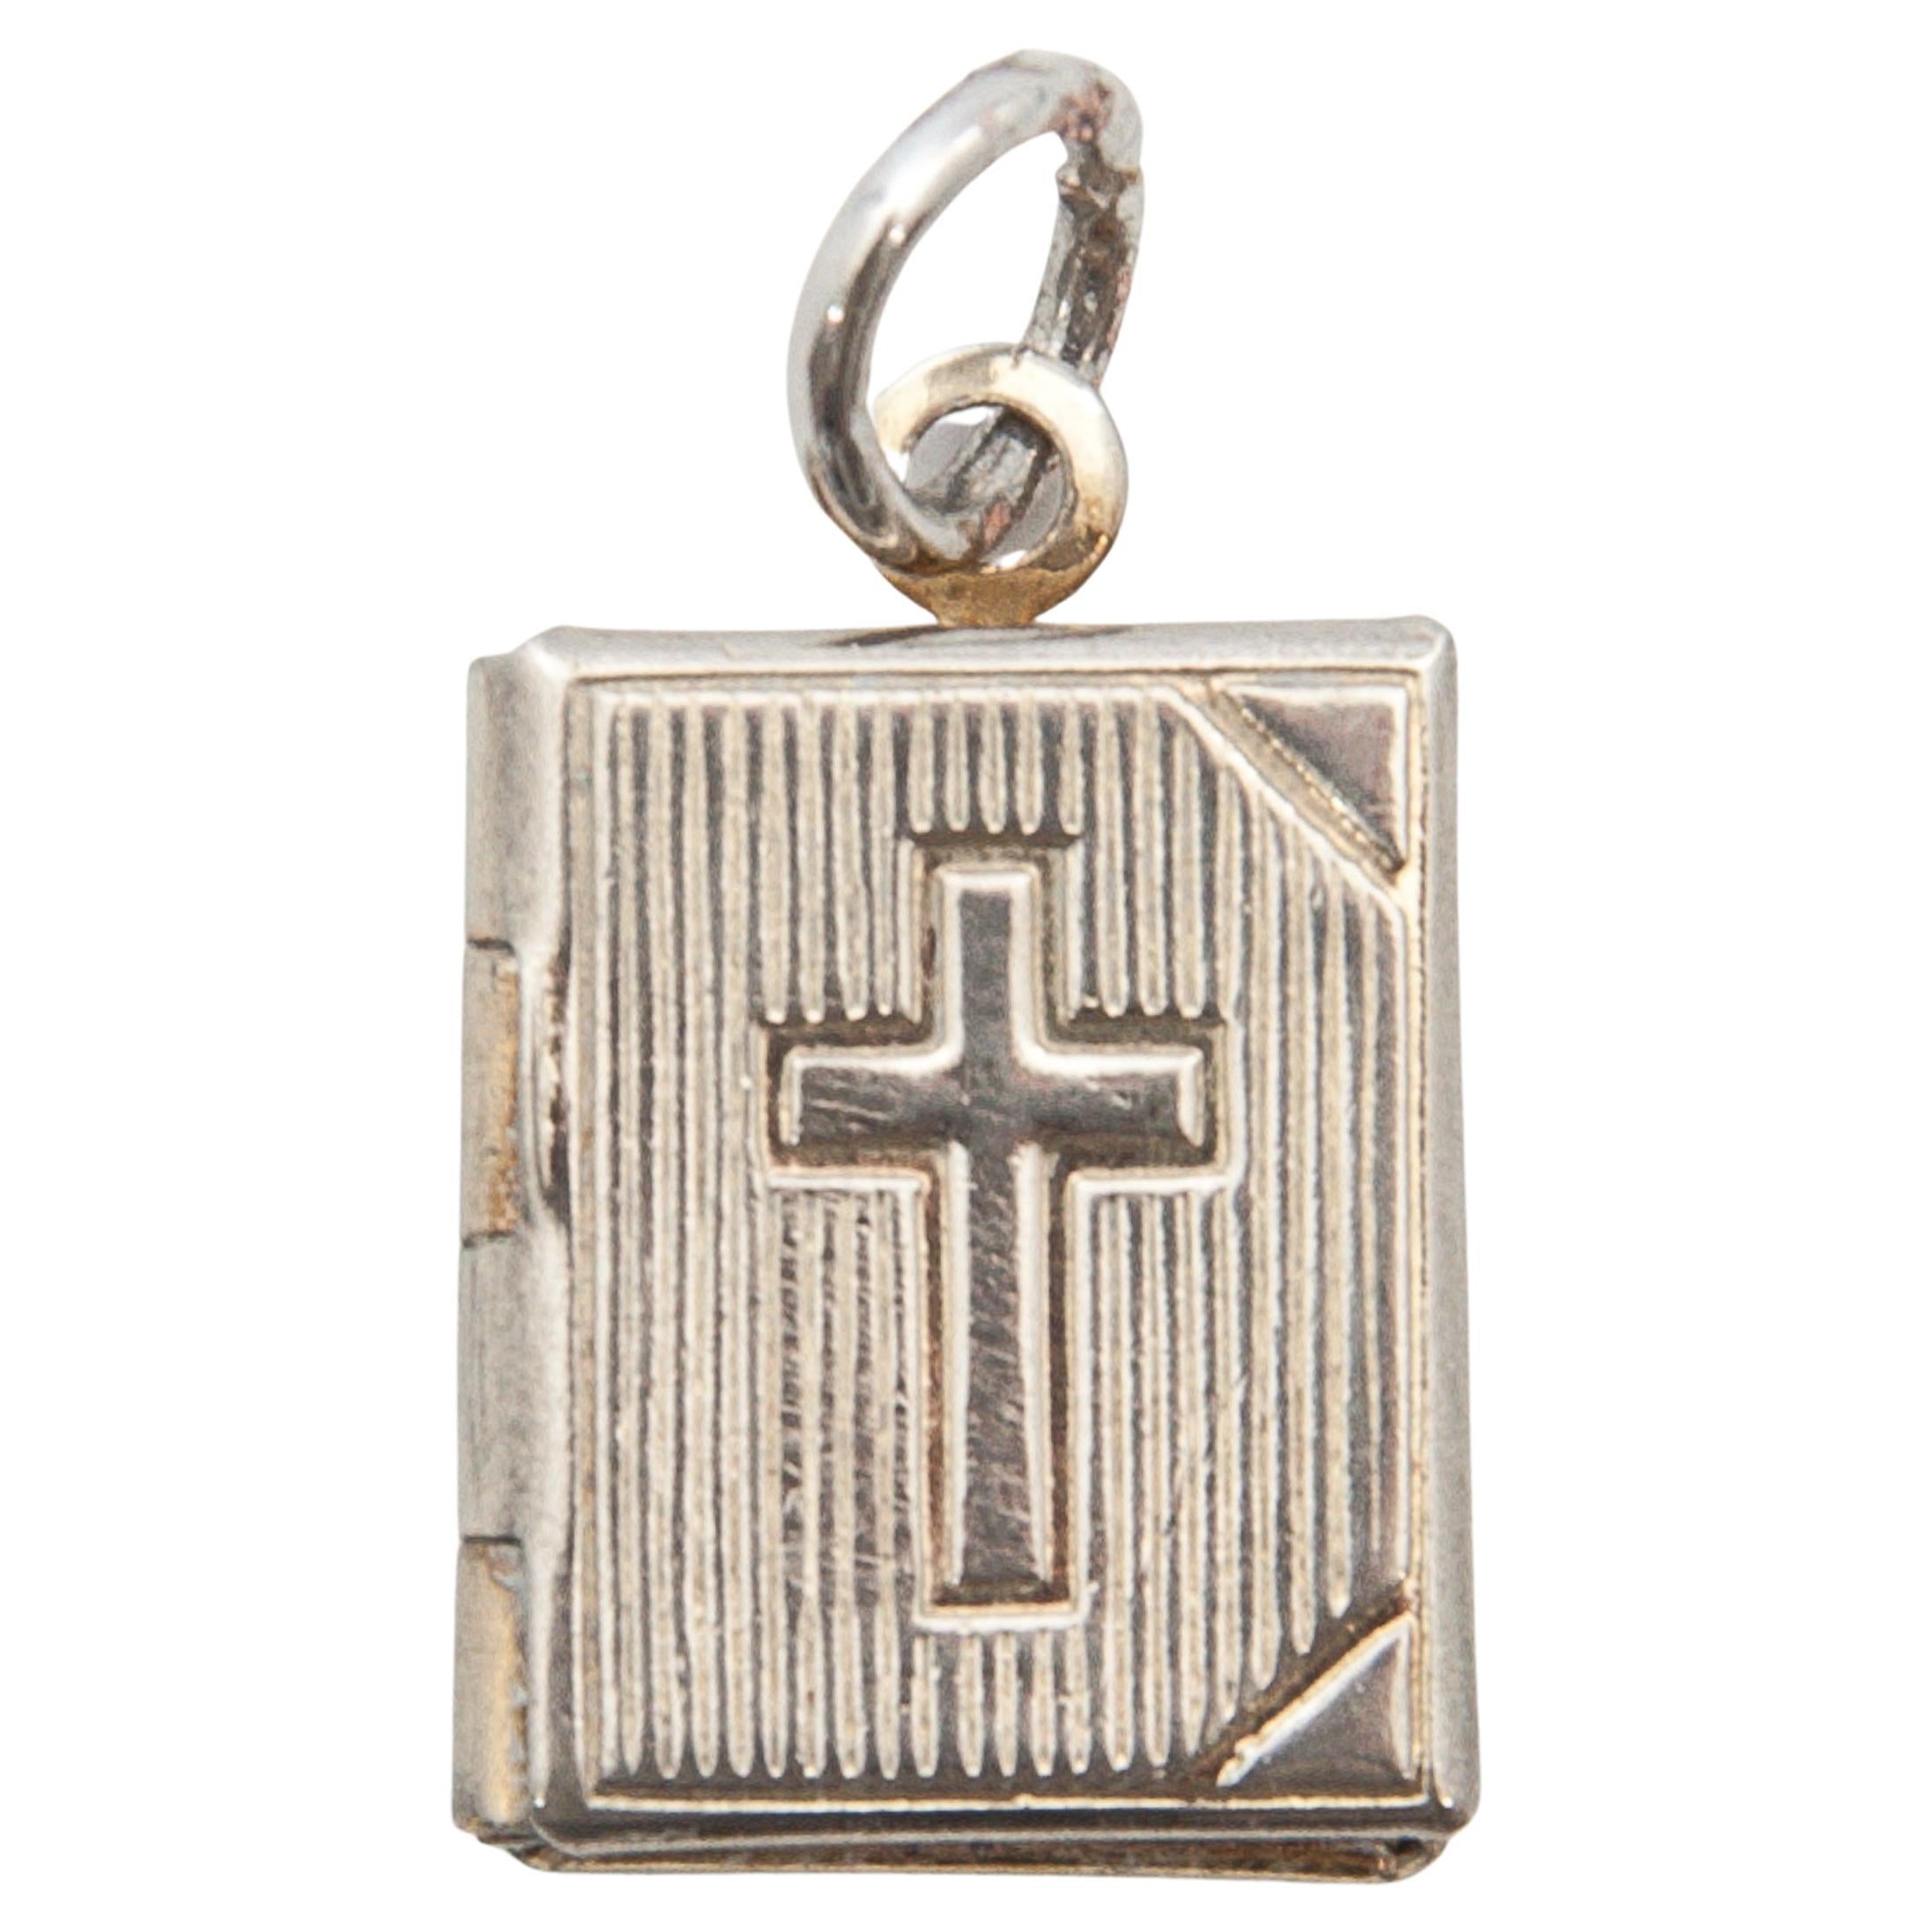 Vintage Religious Miniature Book Locket Charm Pendant